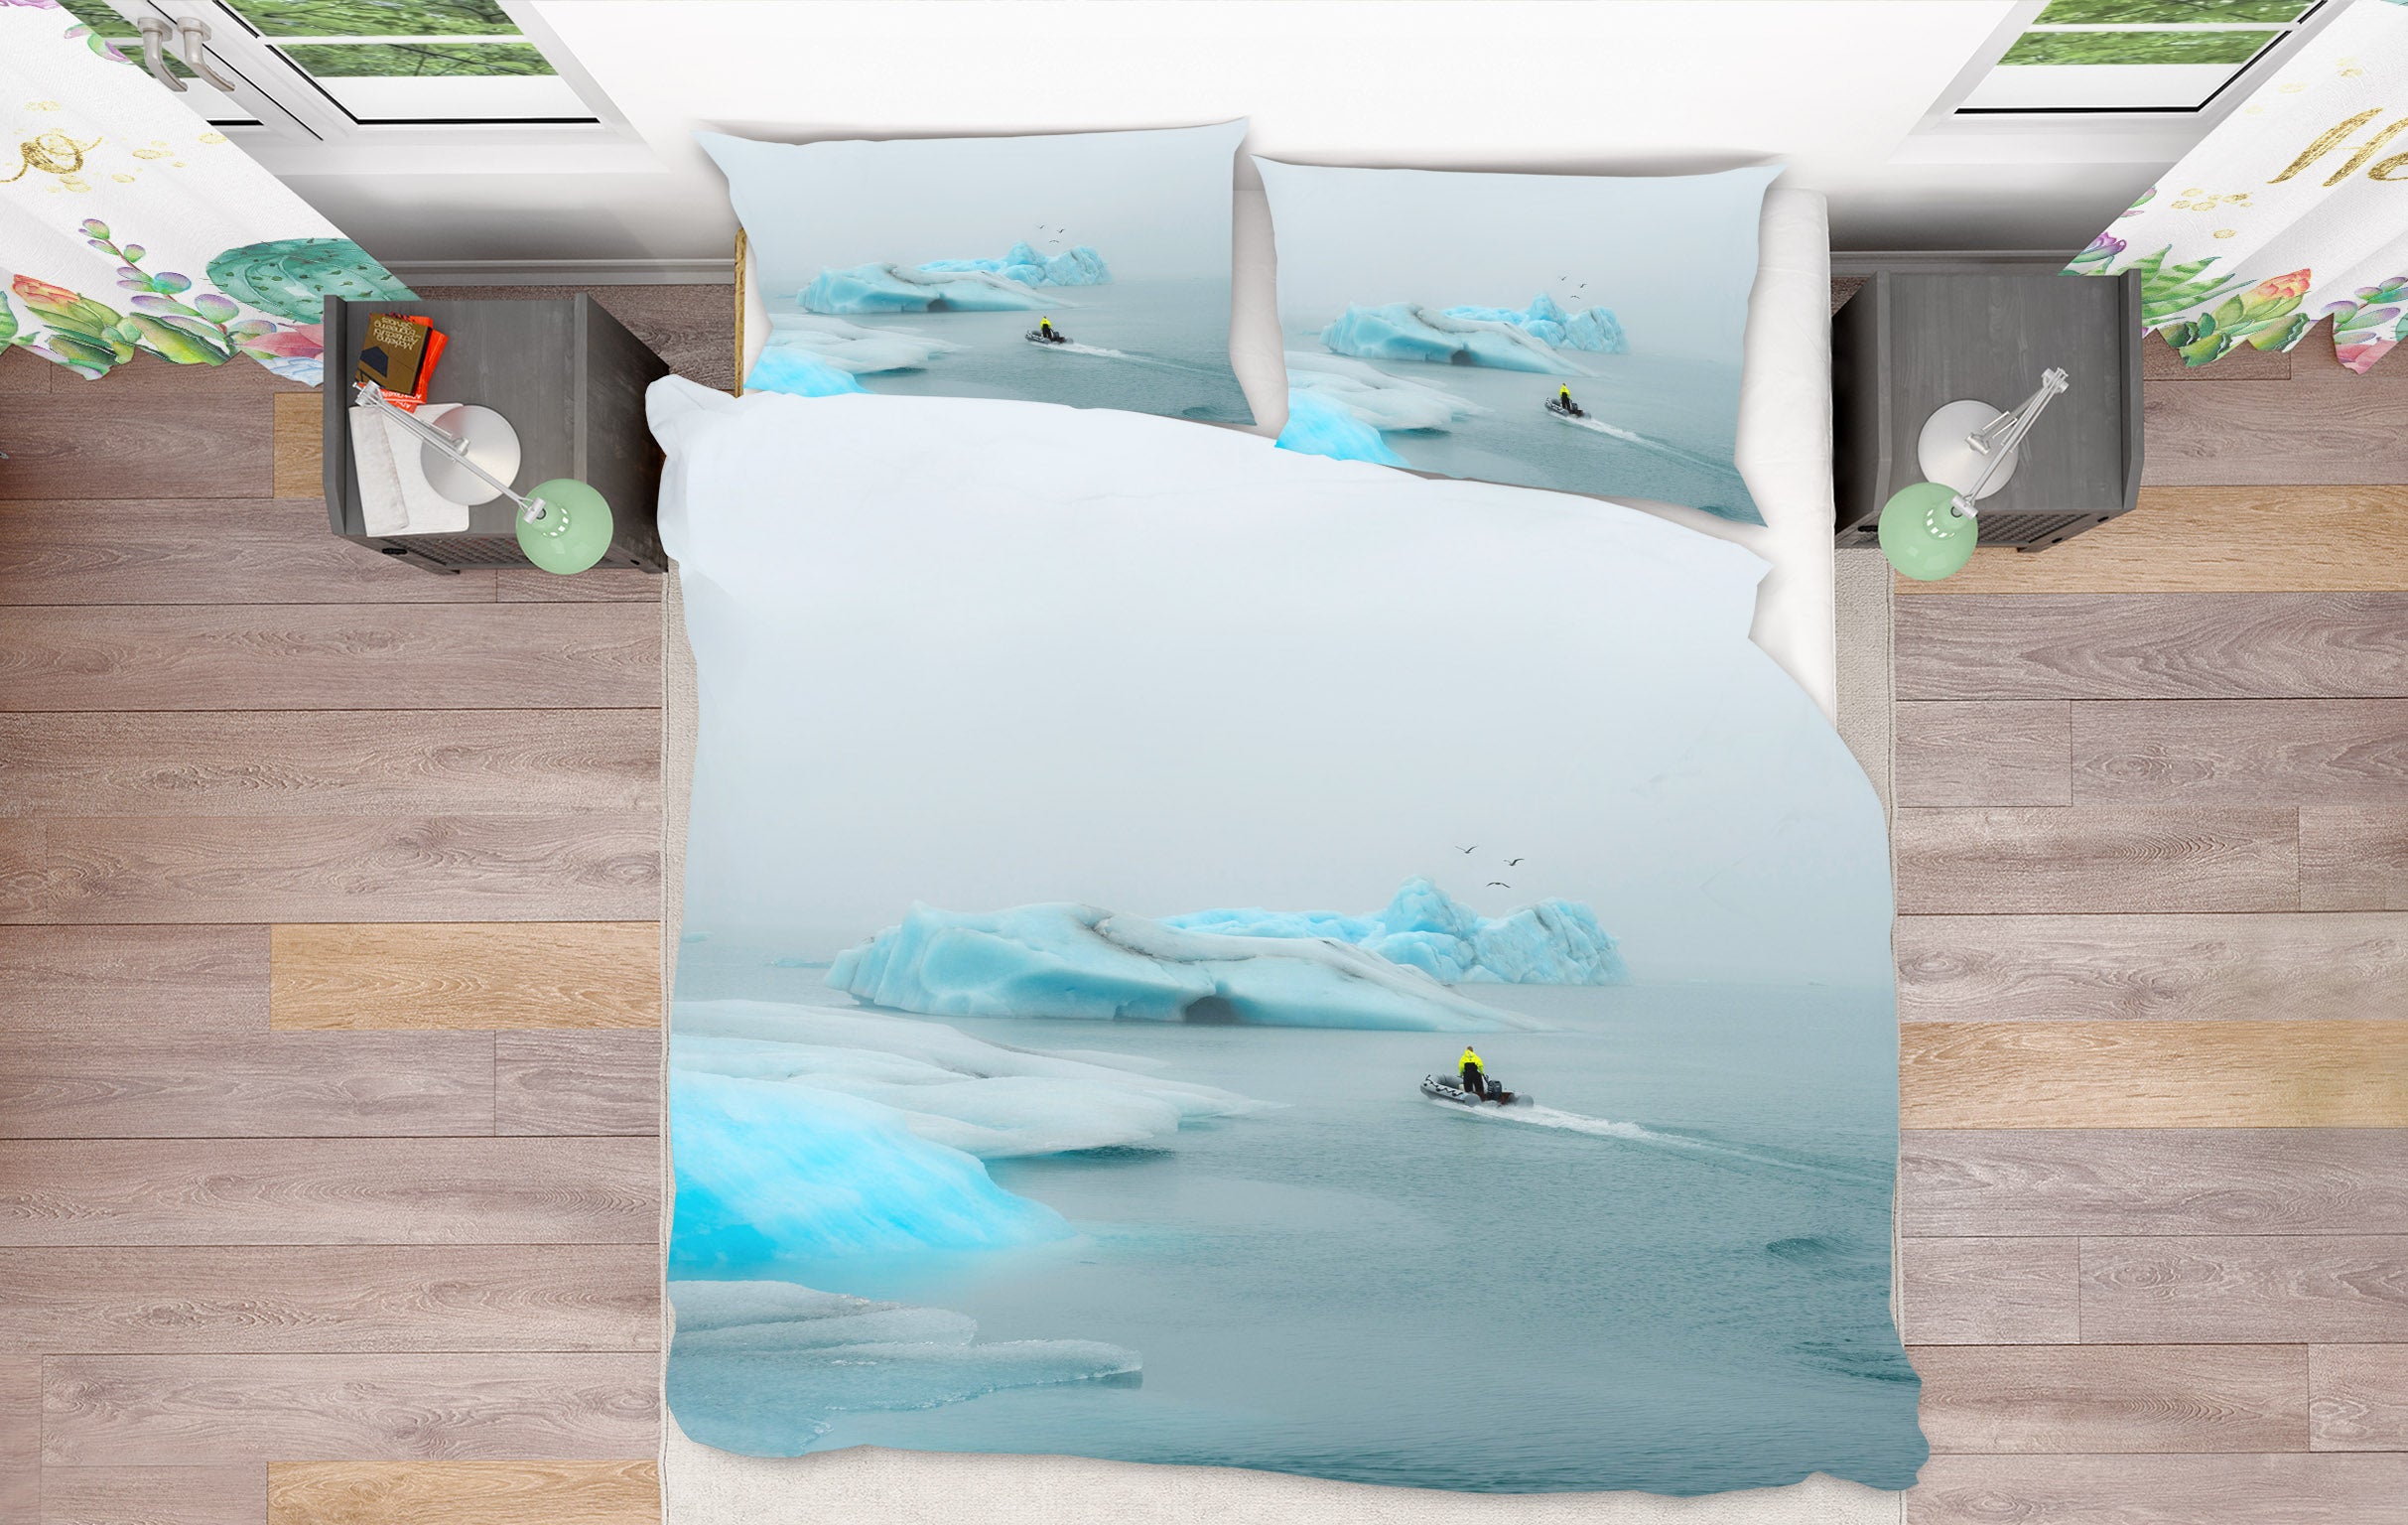 3D Glacier 079 Marco Carmassi Bedding Bed Pillowcases Quilt